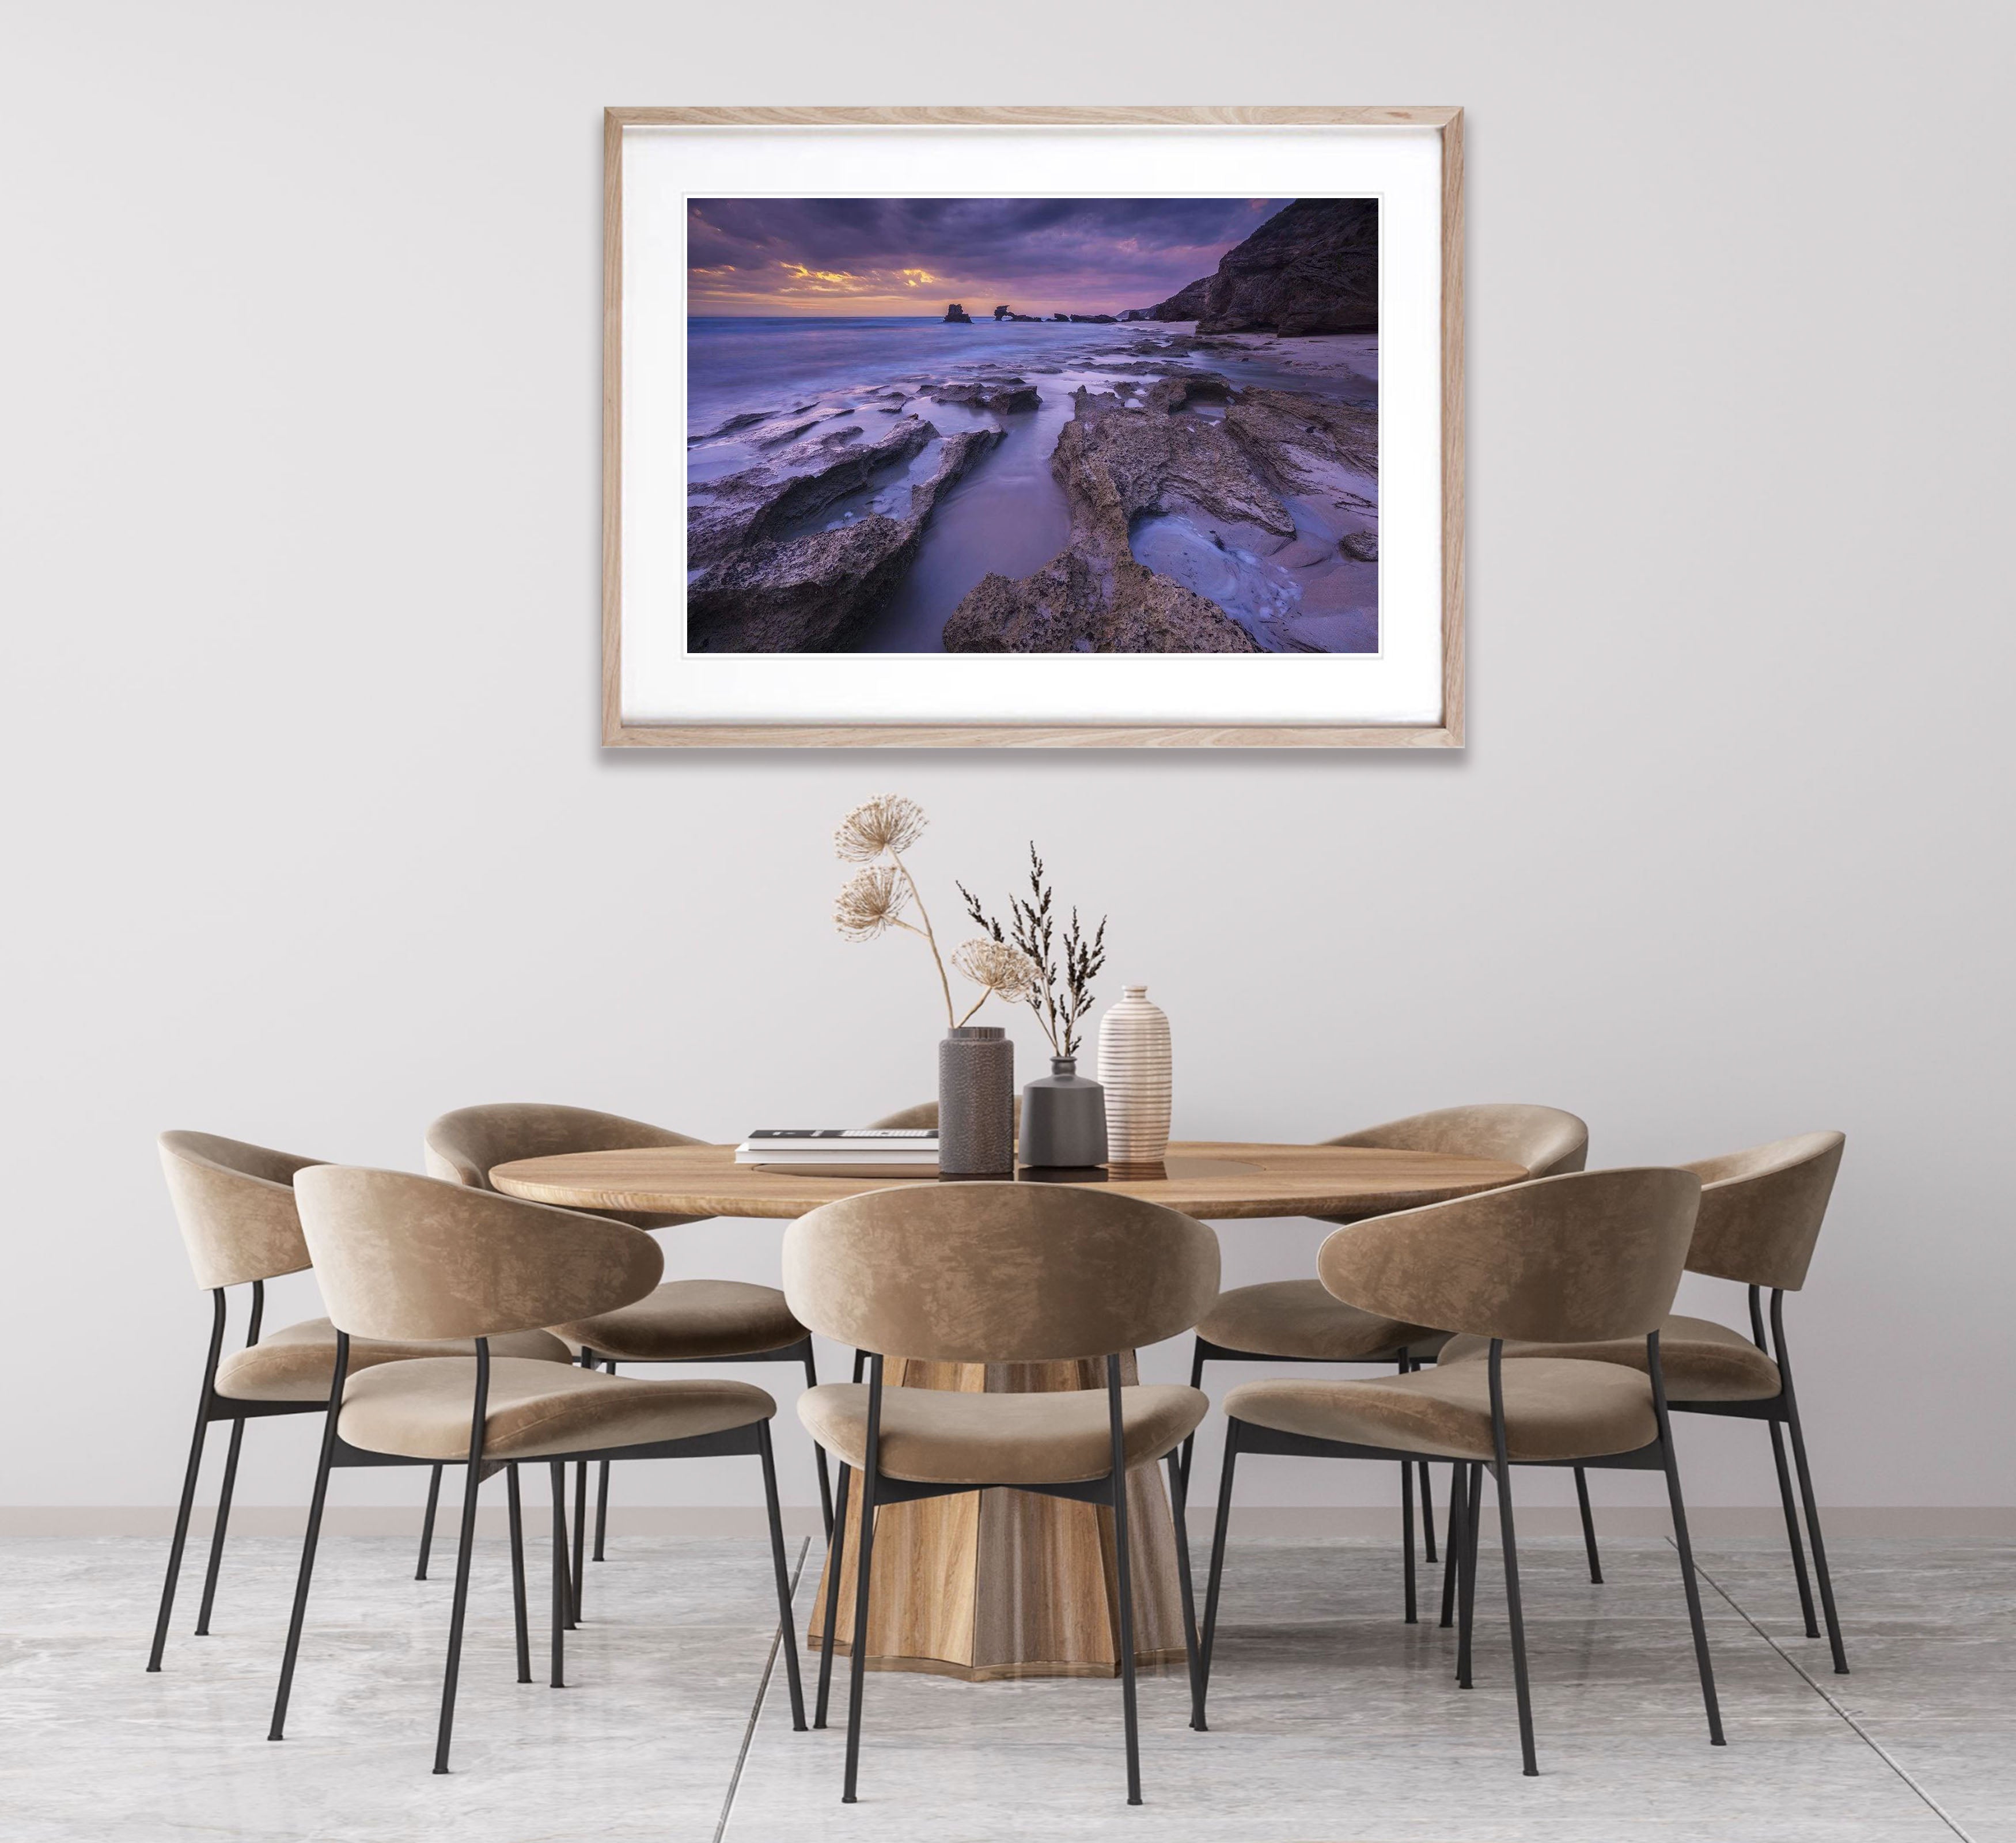 Nevada Rocks whirlpool, Portsea, Mornington Peninsula, VIC